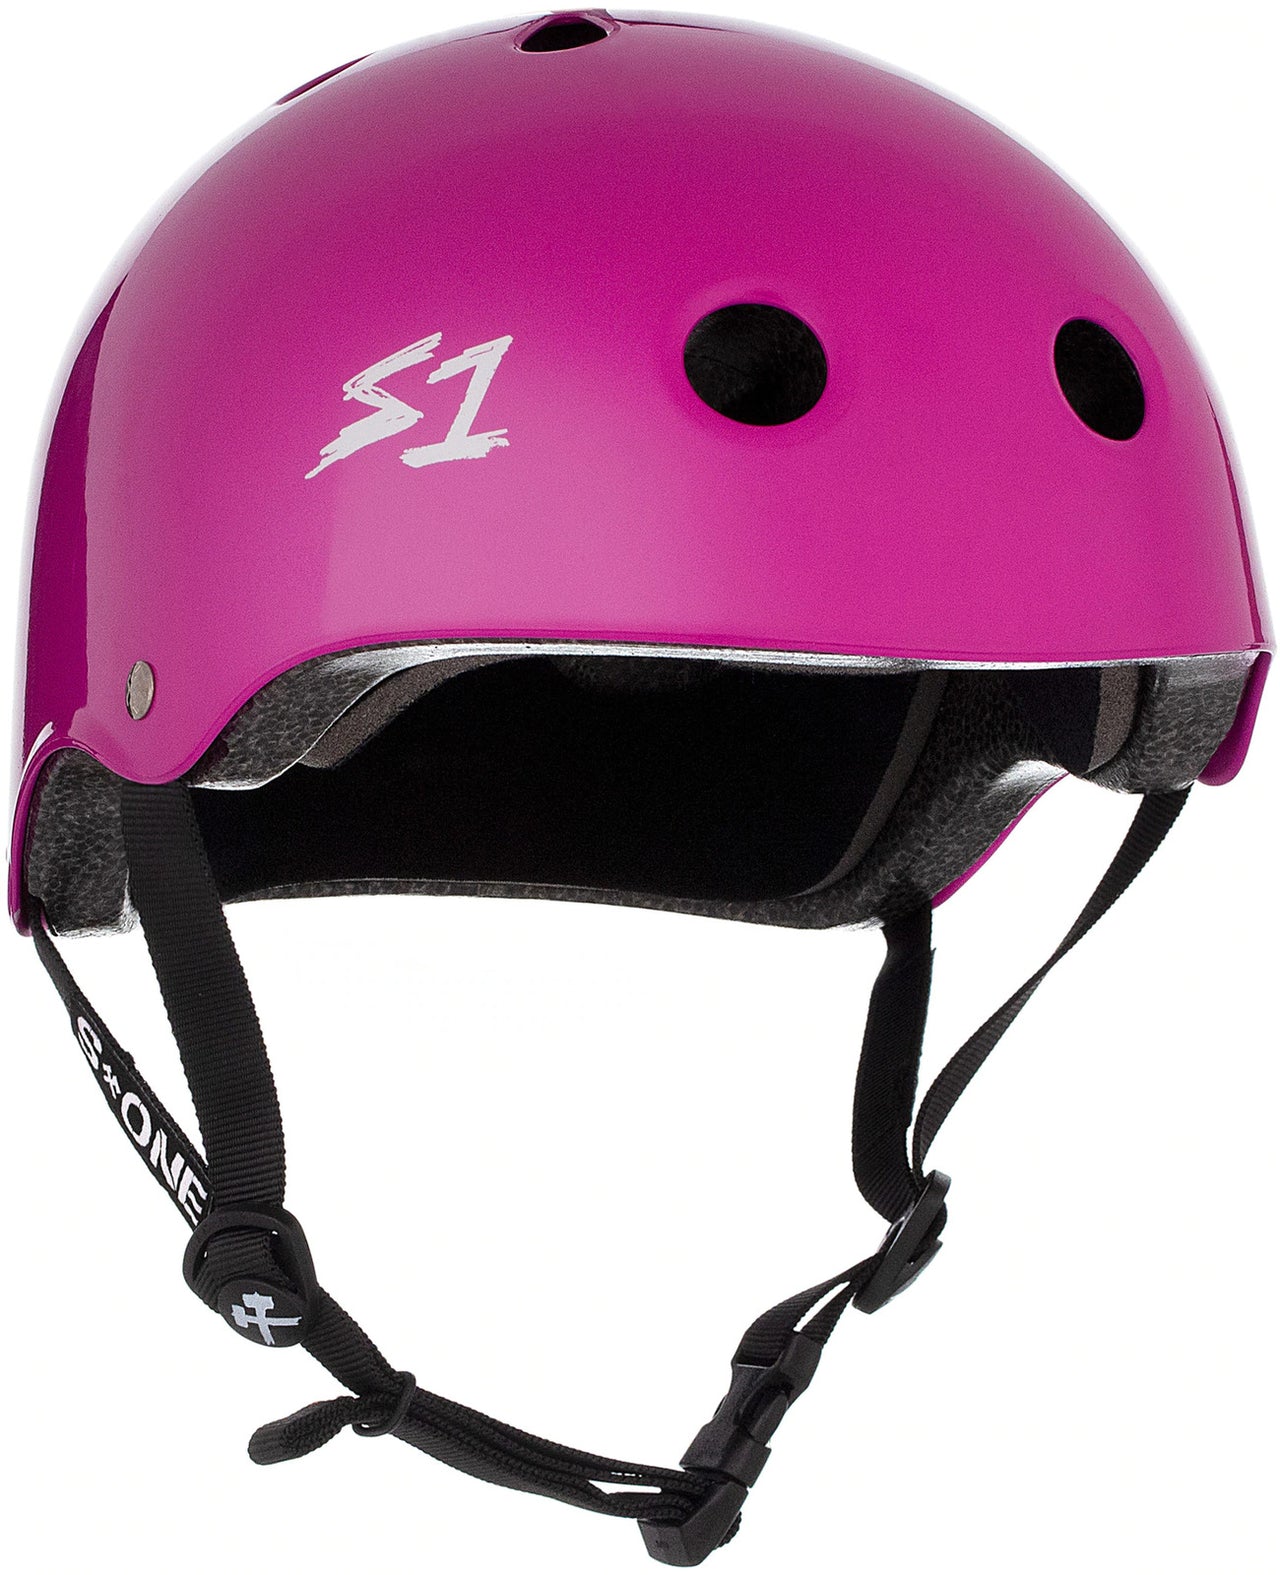 S1 Lifer Helmet in Bright Purple Gloss